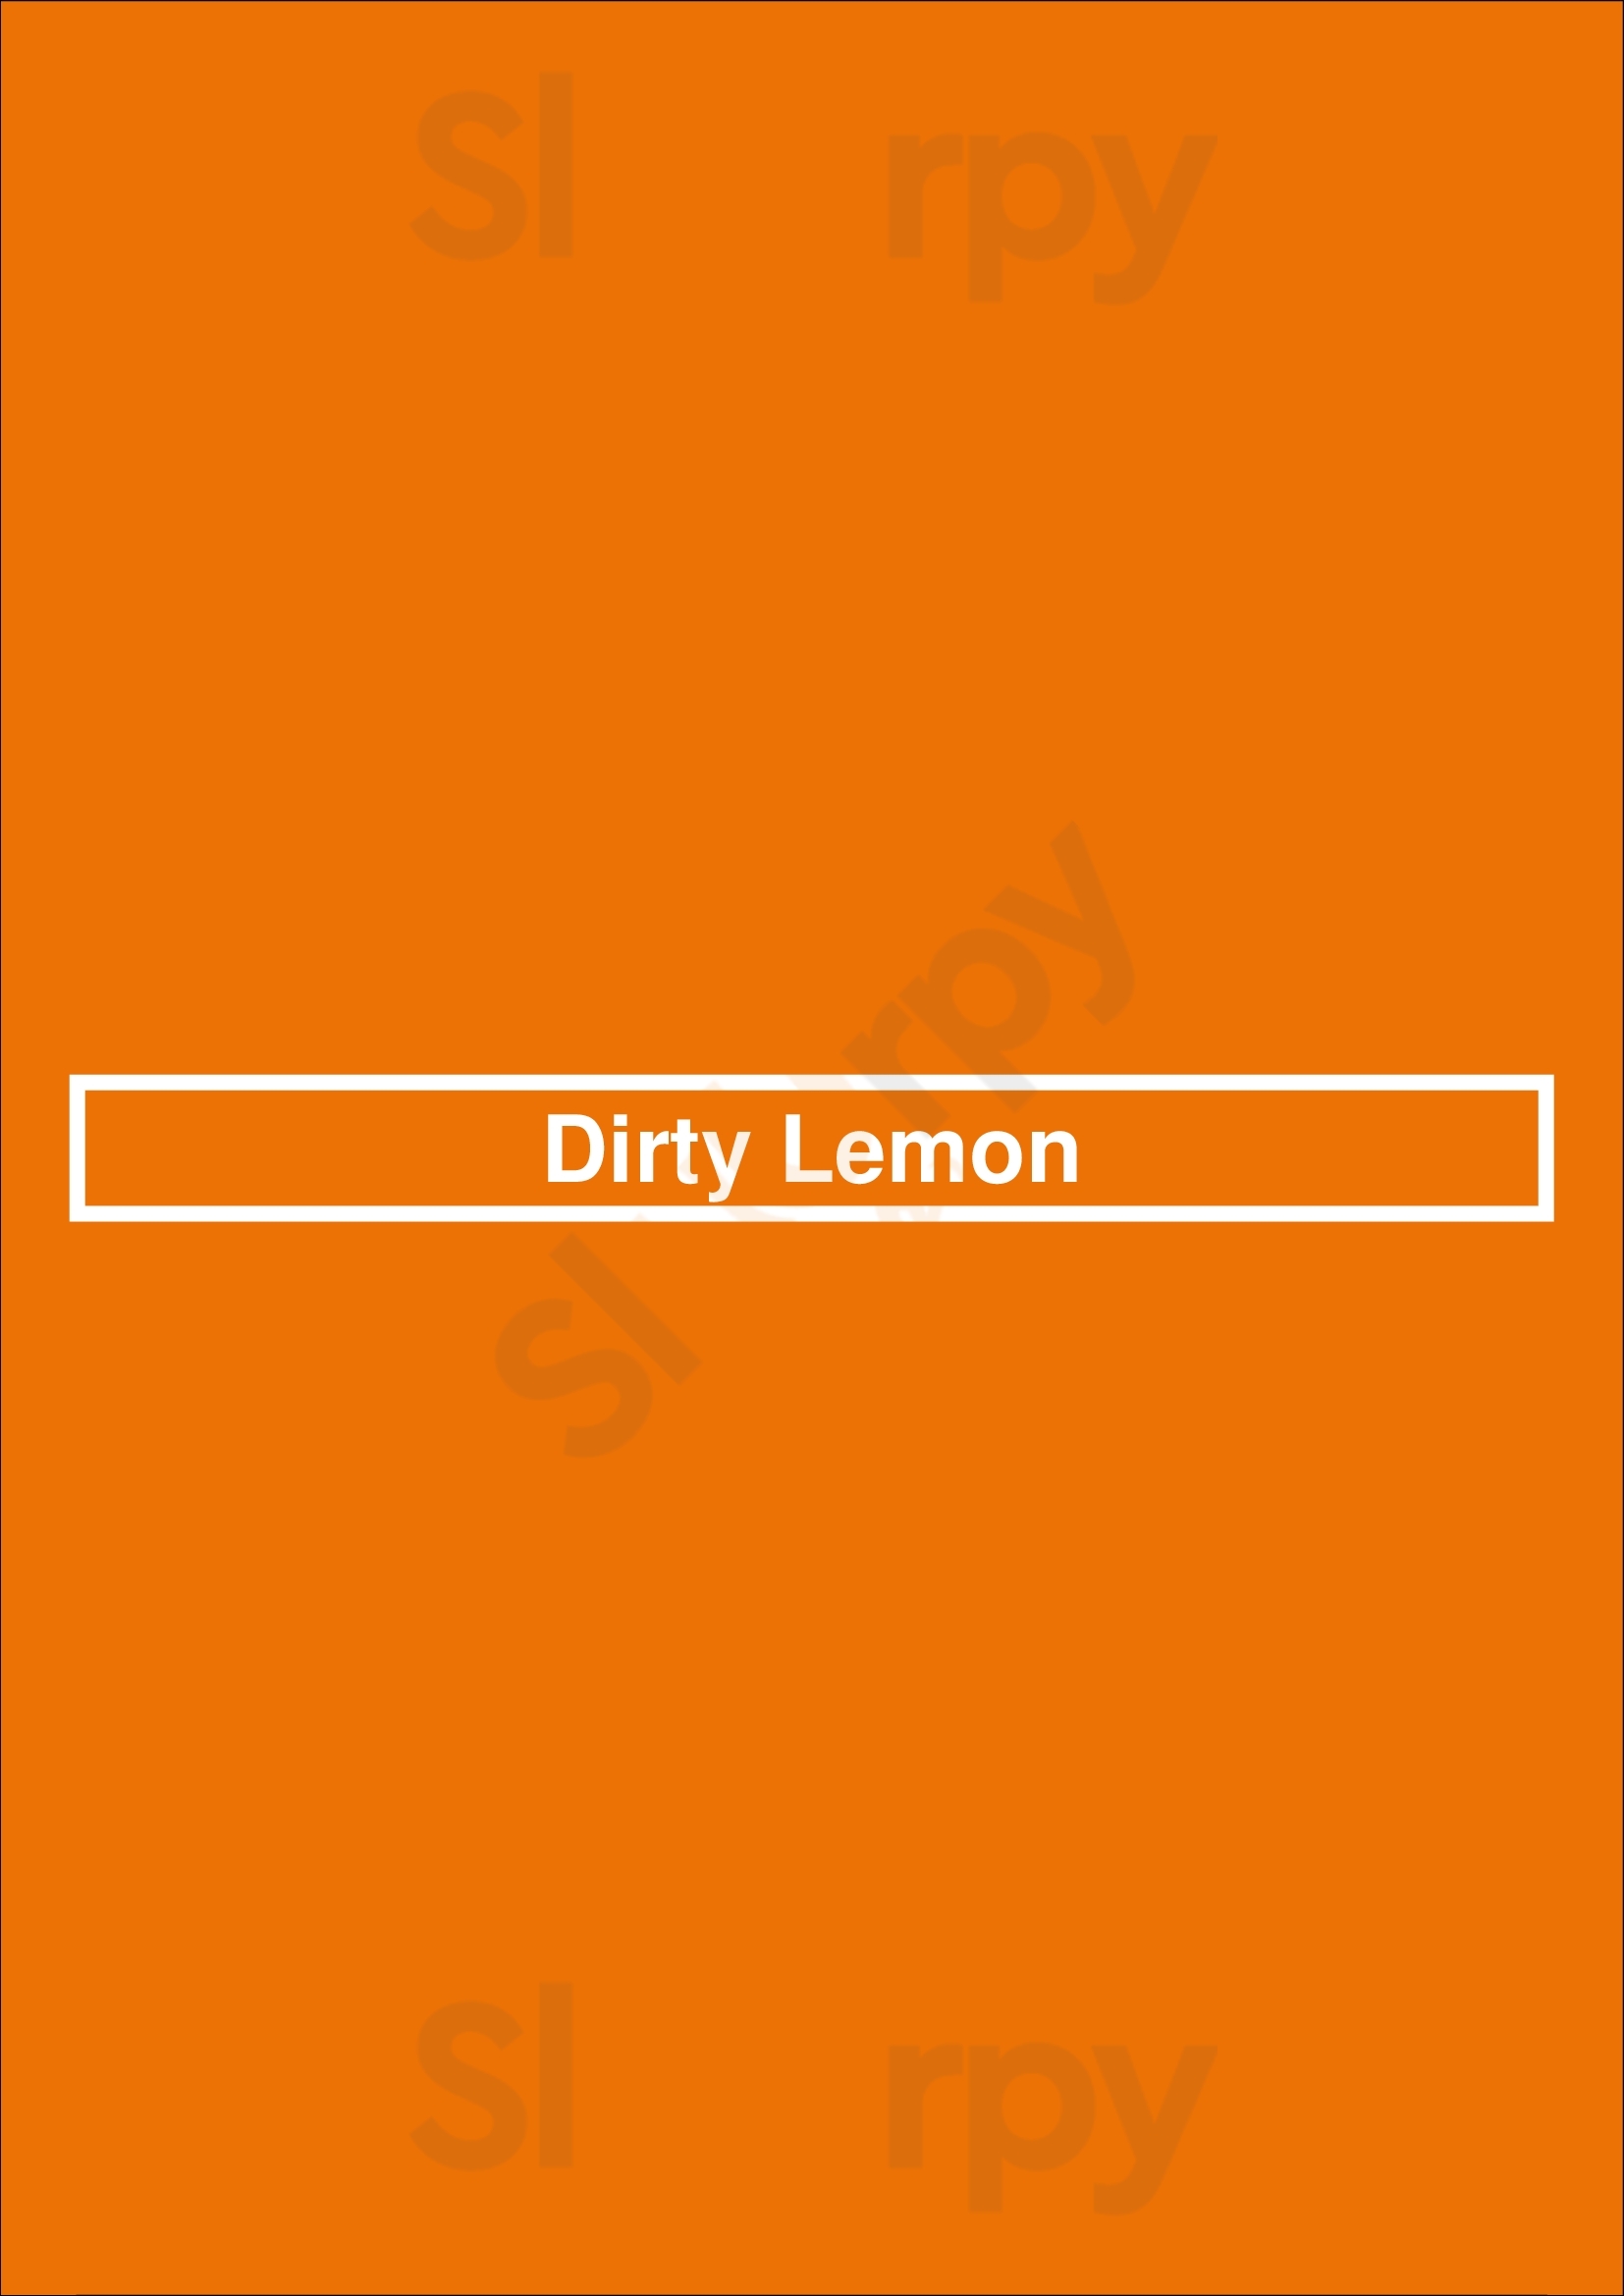 Dirty Lemon Los Angeles Menu - 1